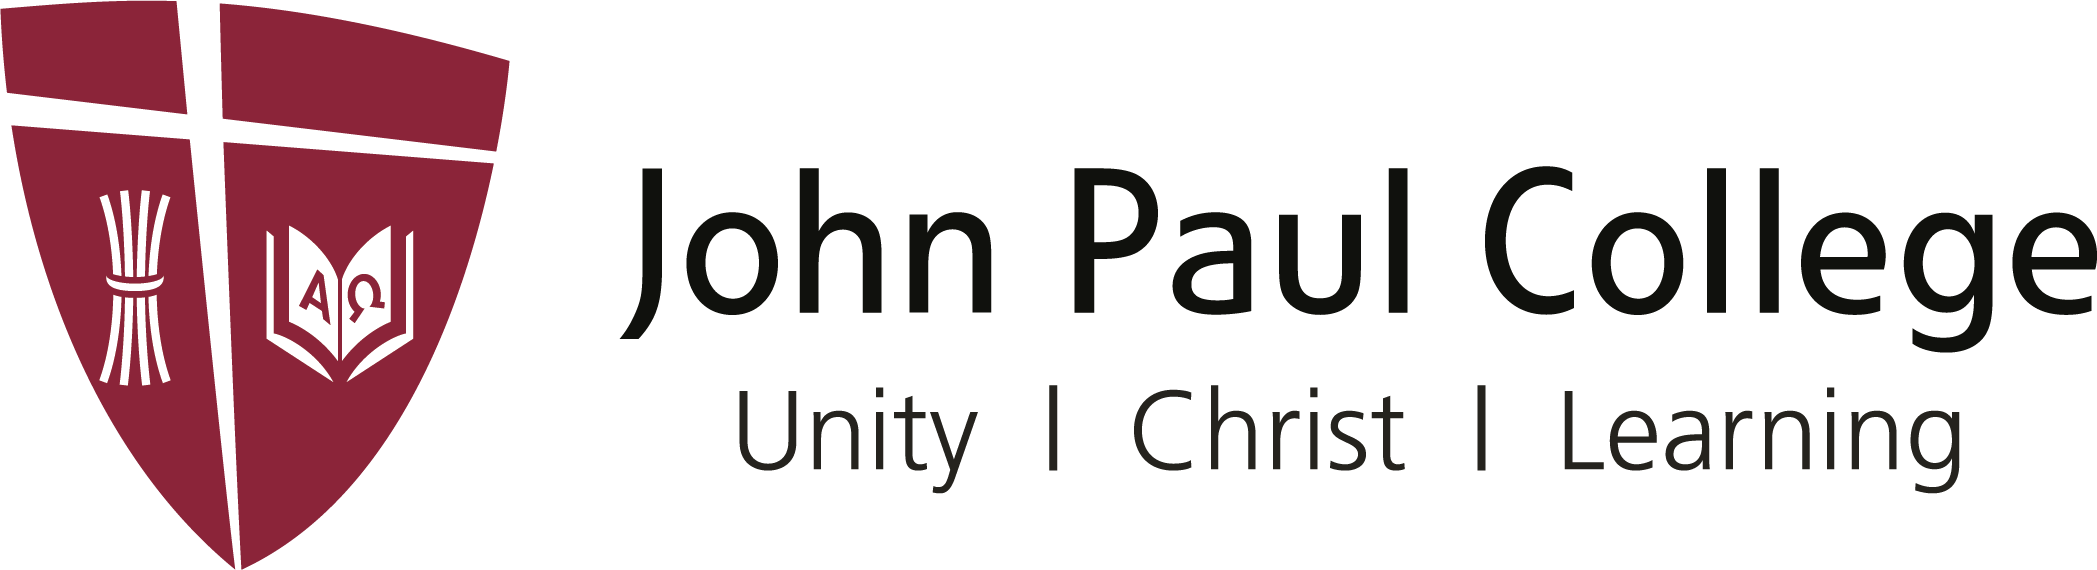 John Paul College Retail Centre